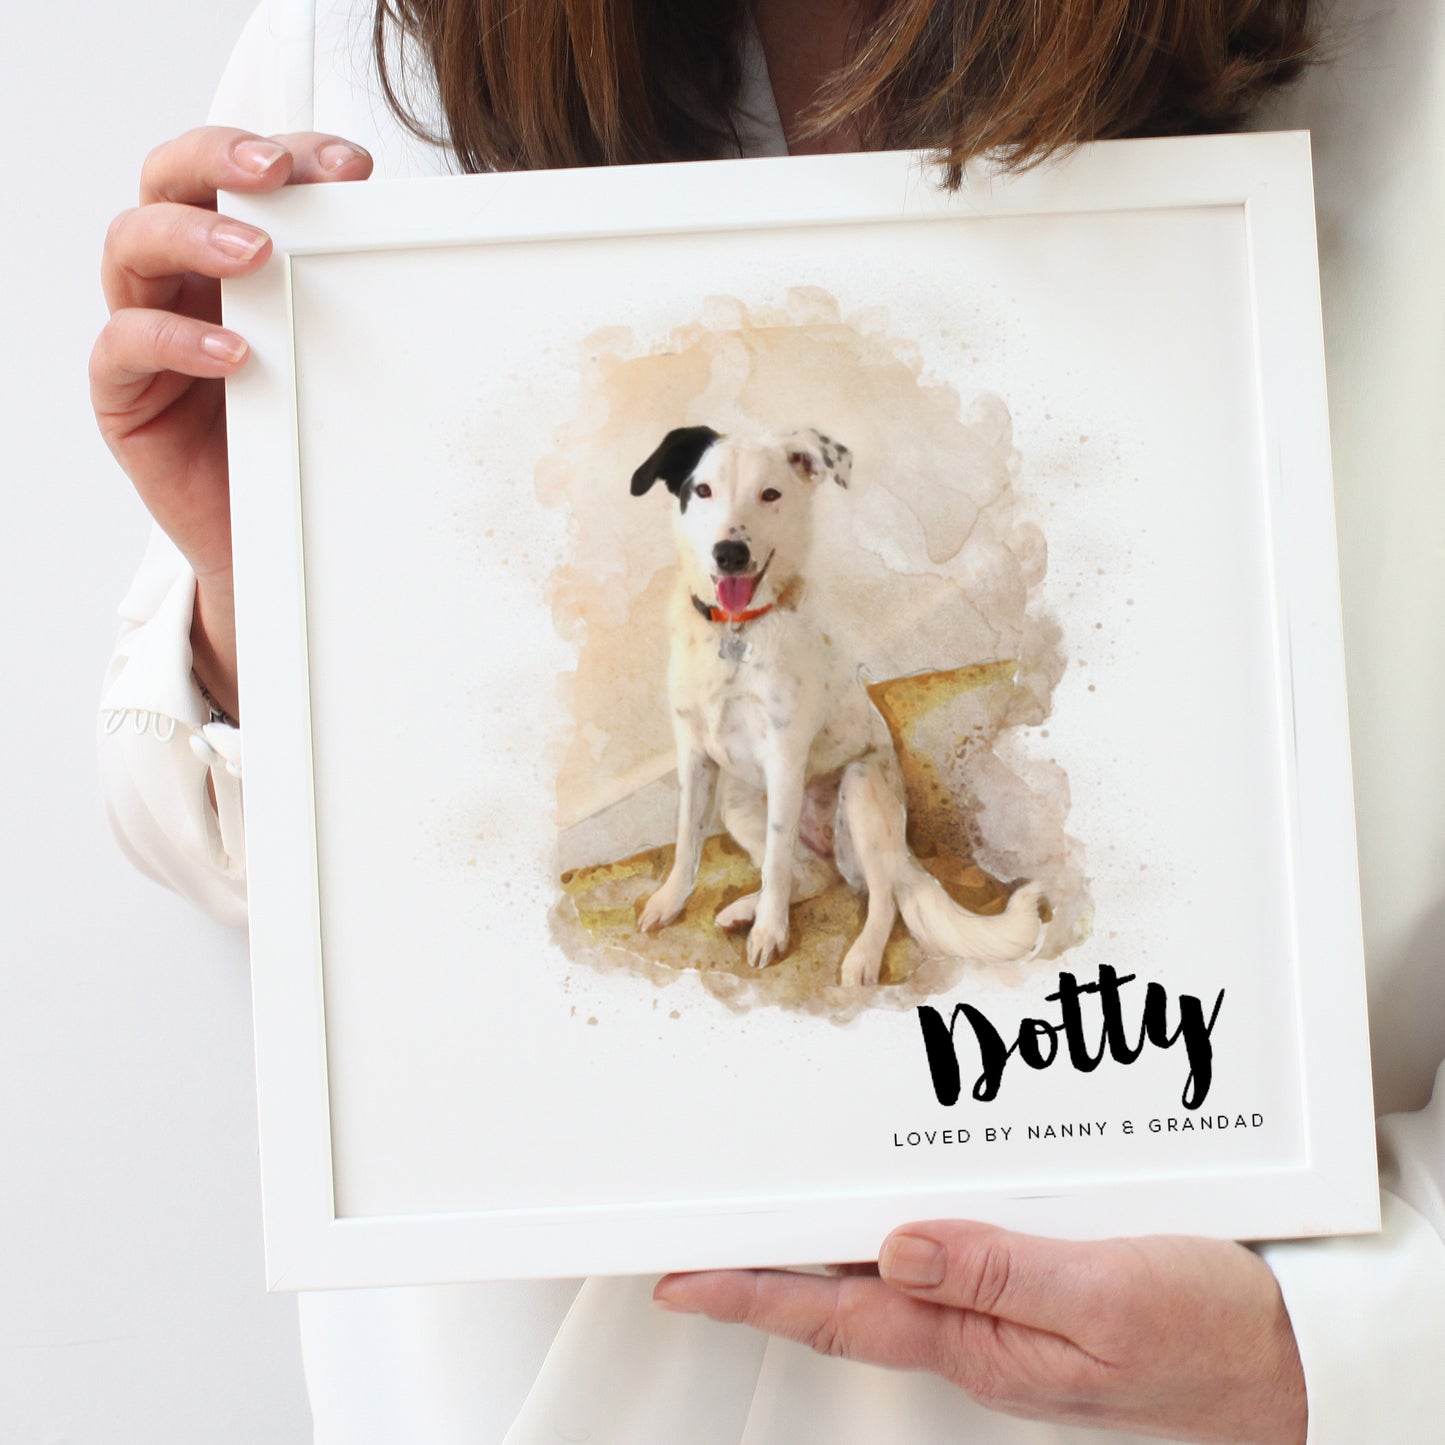 Personalised Watercolour Pet Portrait Framed Print